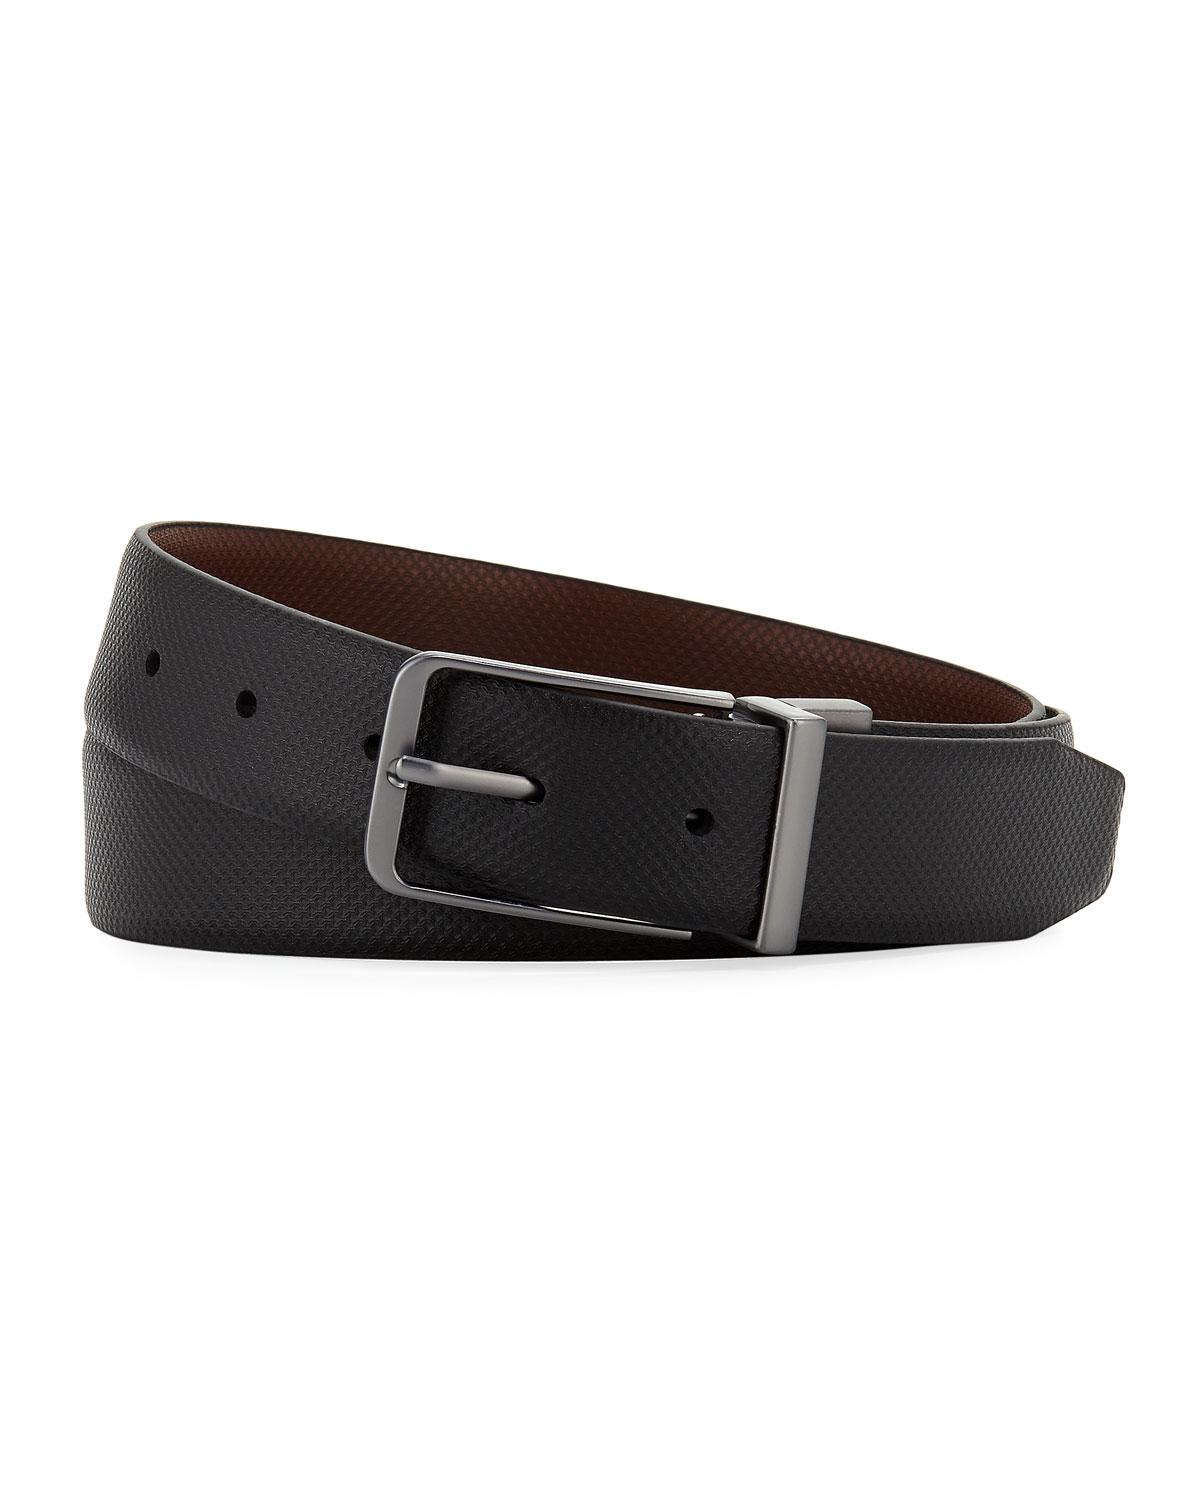 Neiman Marcus Reversible Textured Leather Belt in Black/Brown (Brown) for Men - Lyst